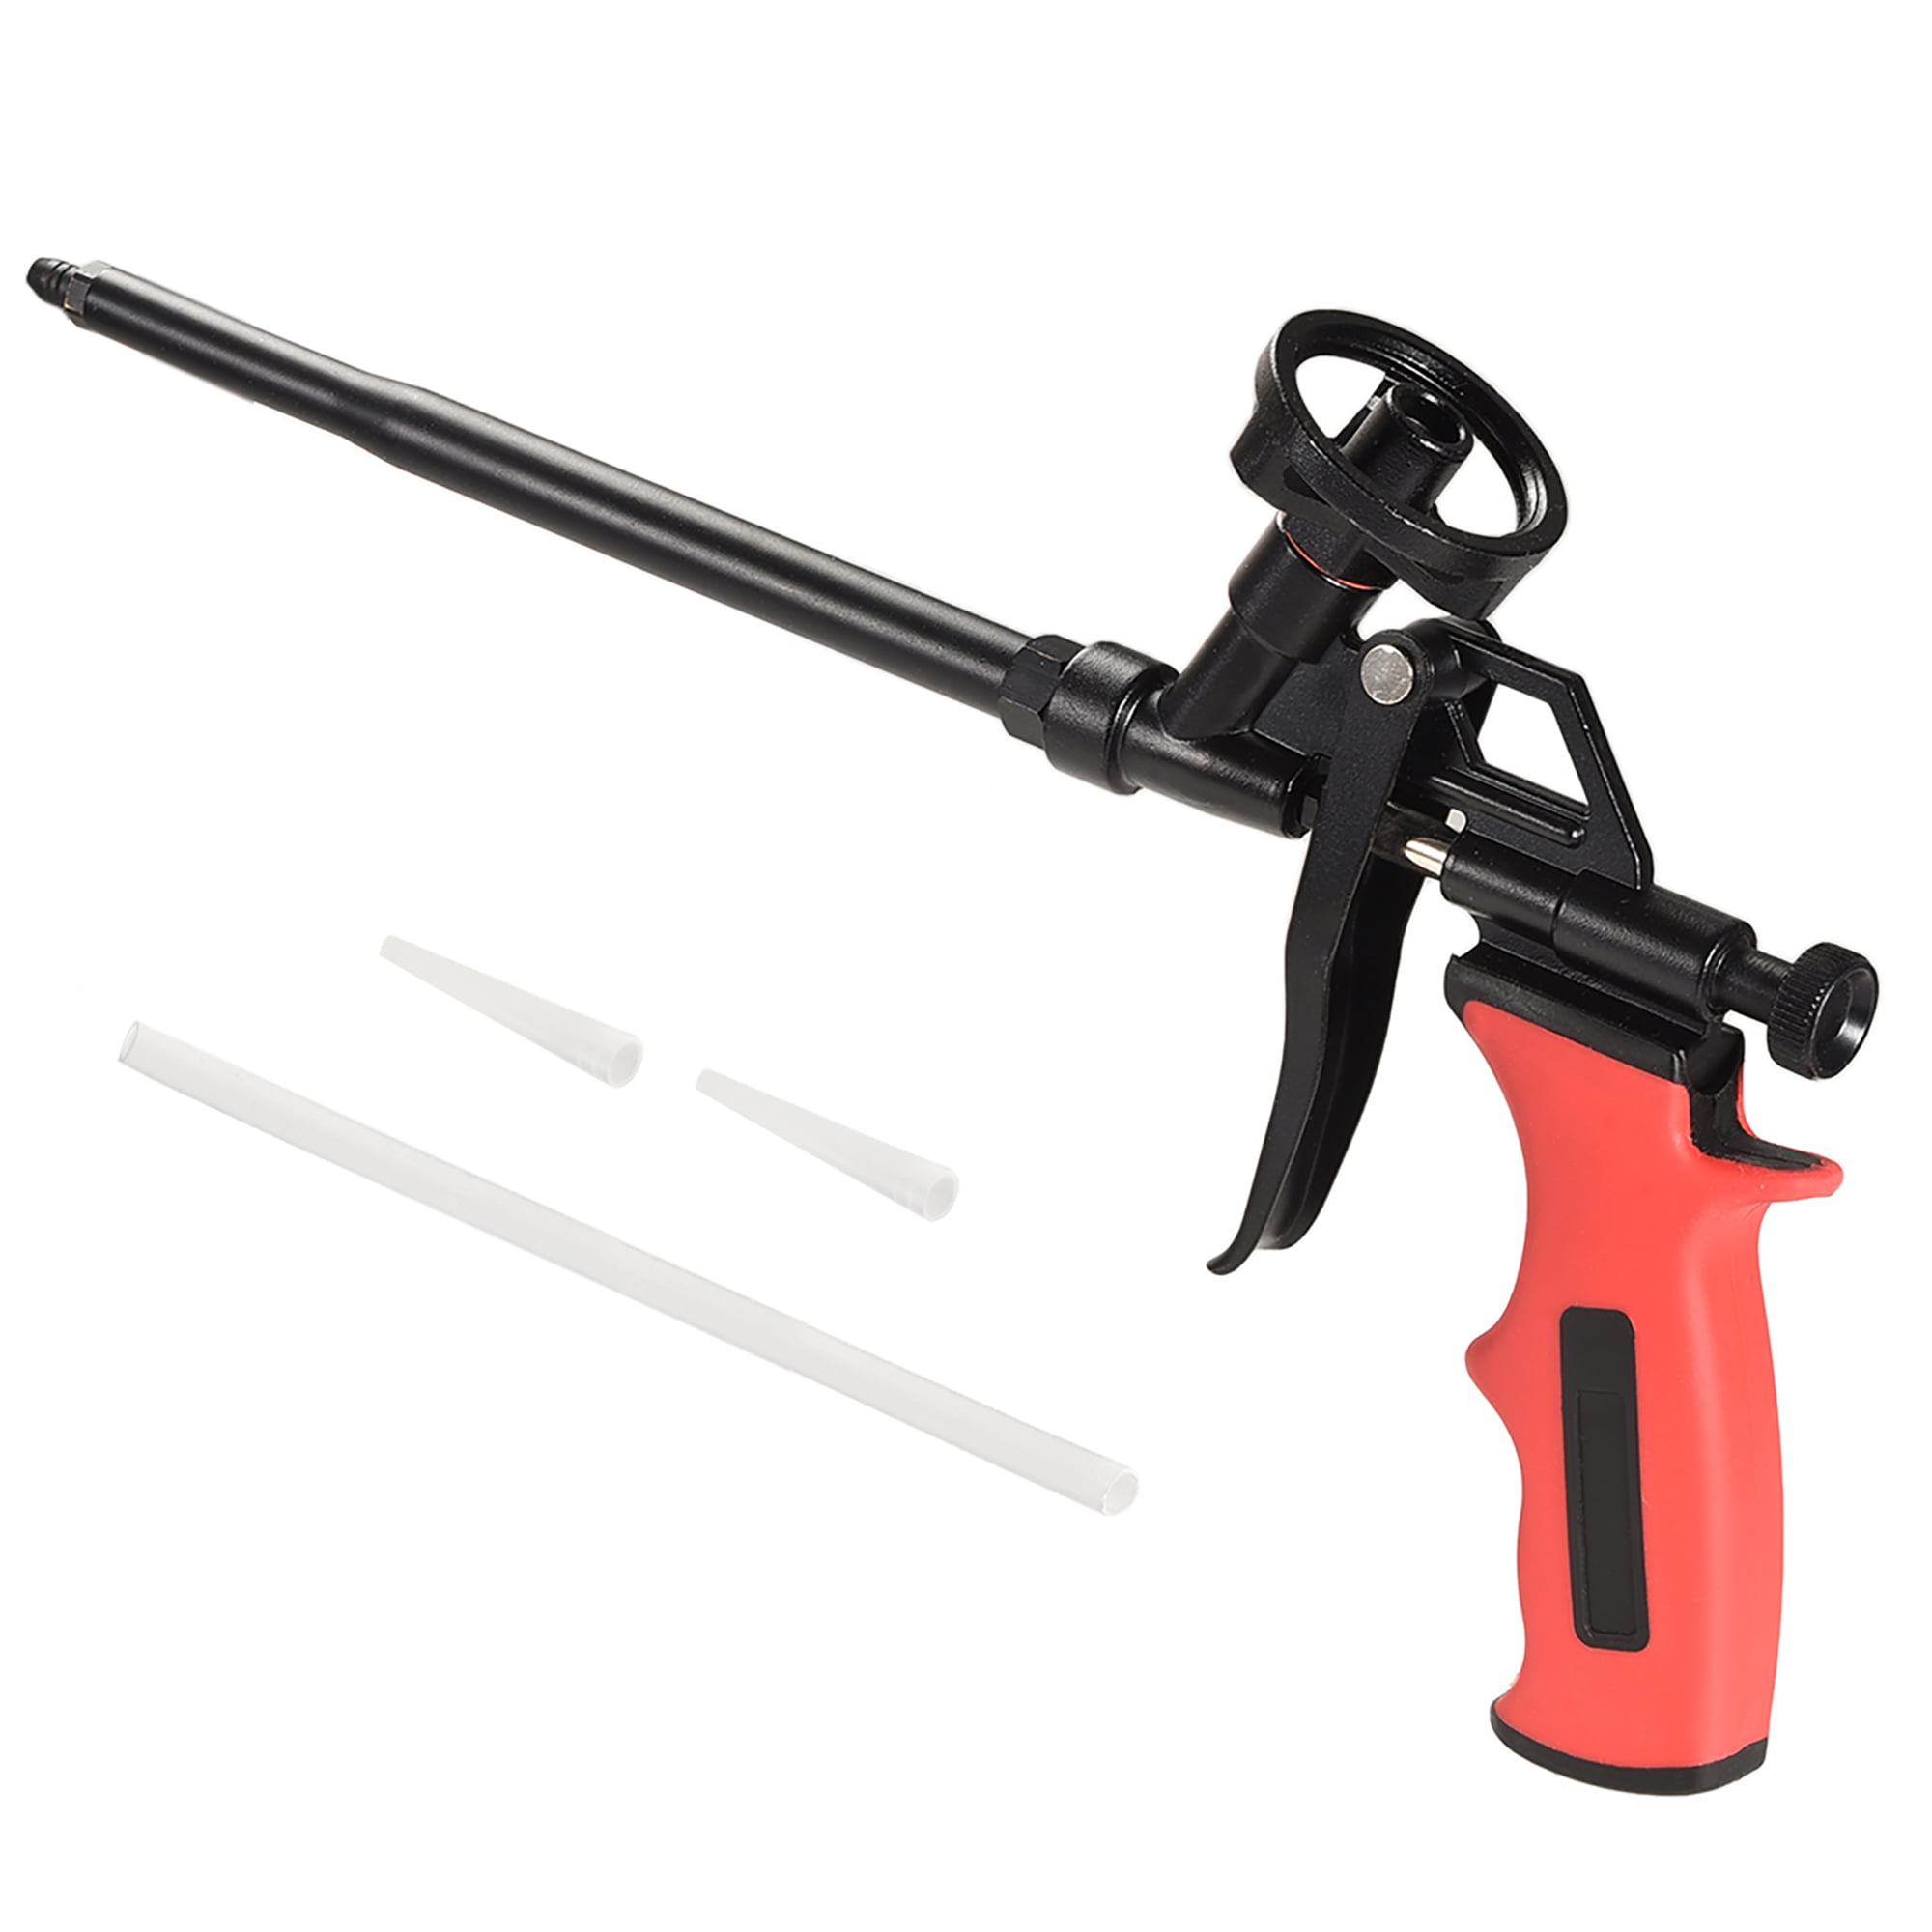 1xFoam Expanding Spray GunSealant Dispensing PU Insulating Applicator Tools 